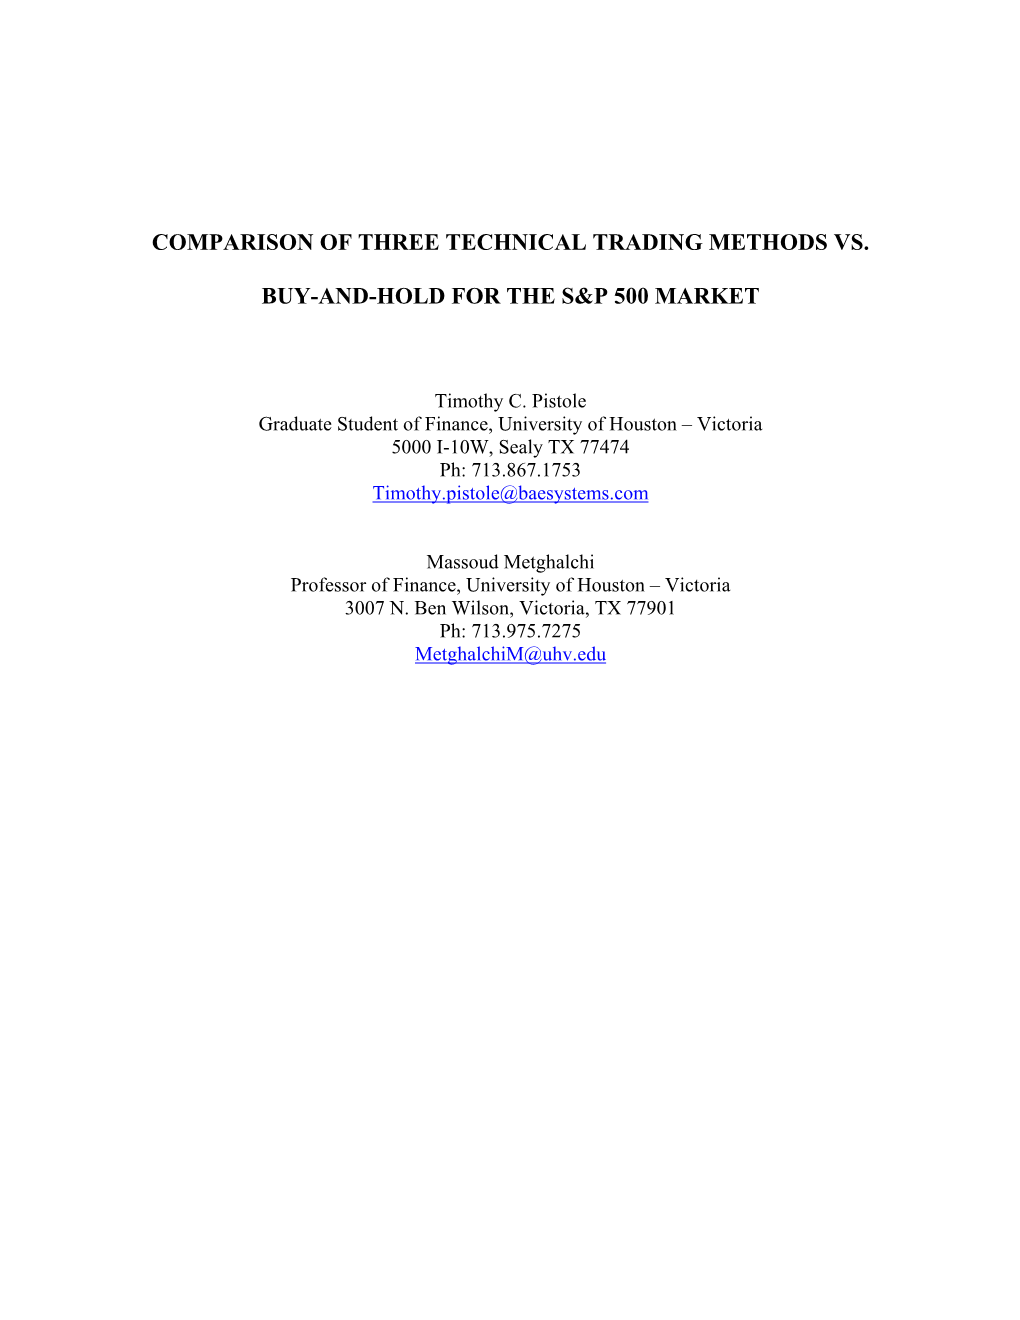 Comparison of Three Technical Trading Methods Vs